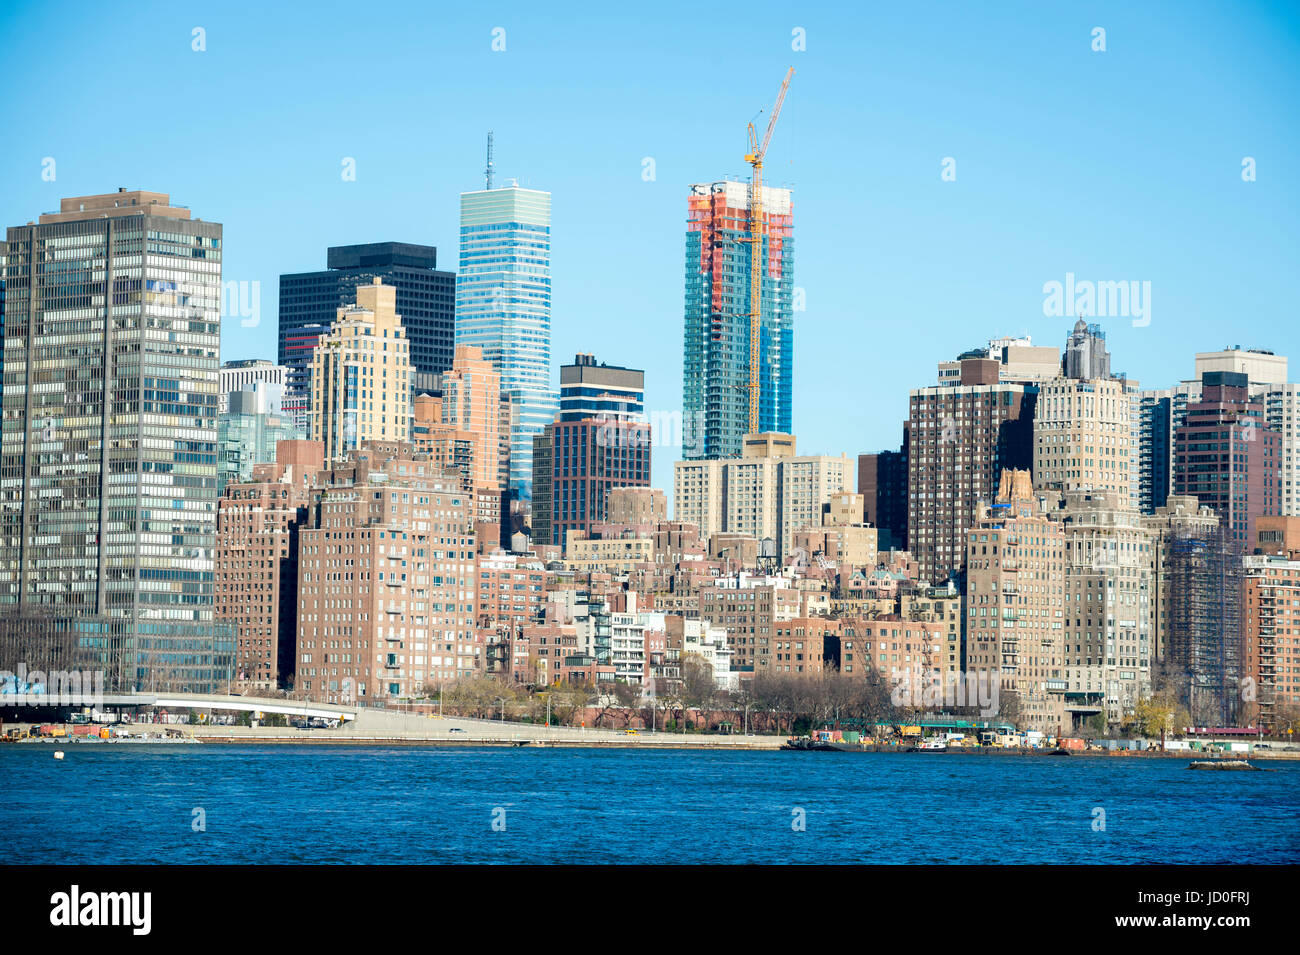 New York City skyline view of  Manhattan from the waters of New York Harbor Stock Photo